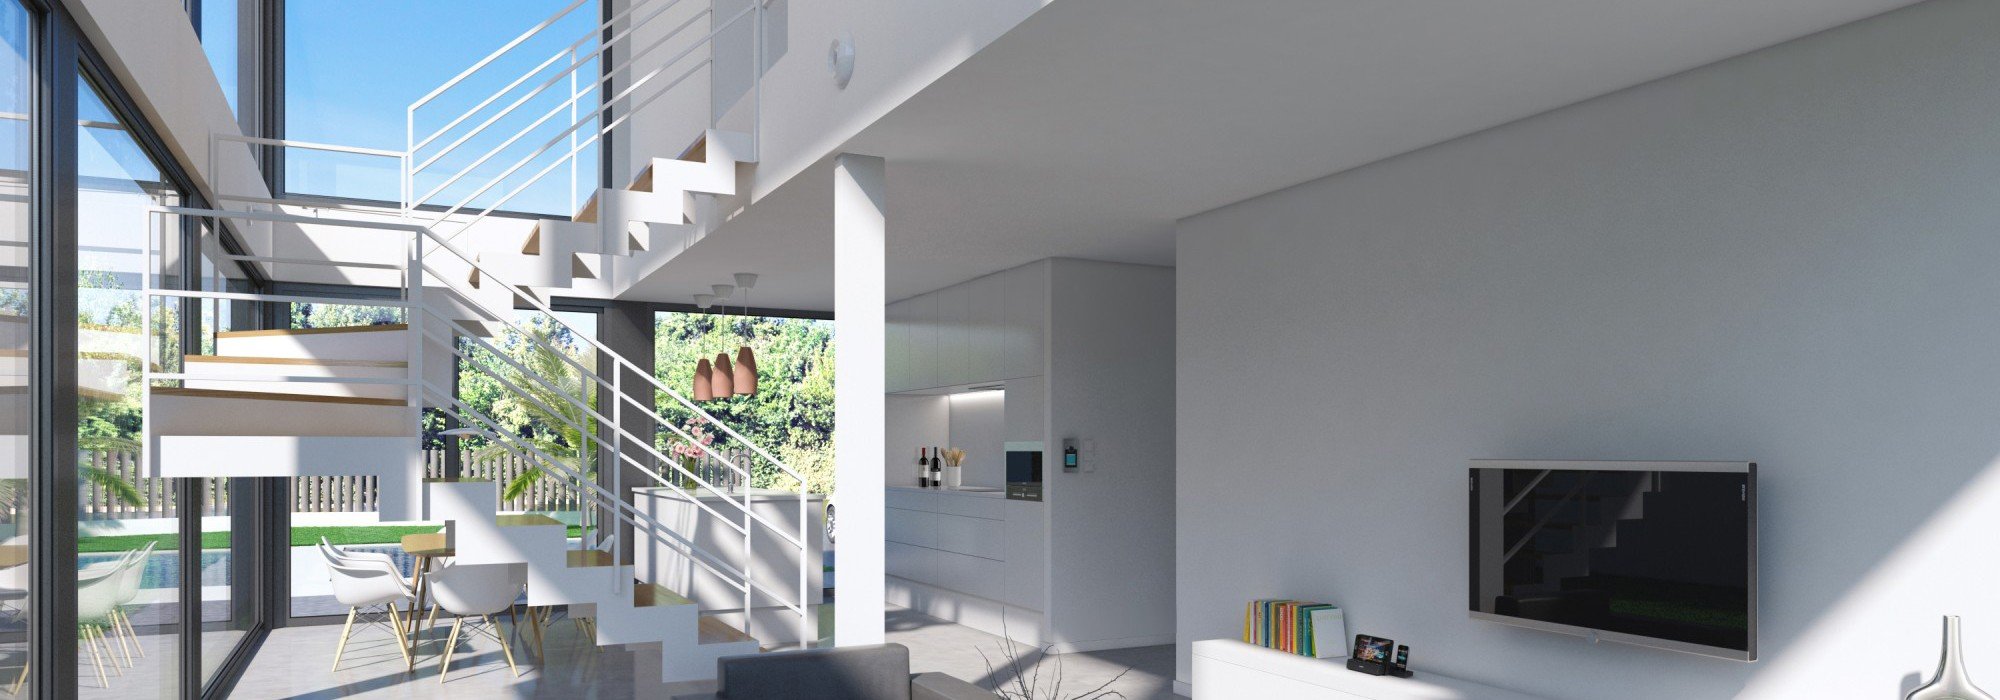 Vivienda modular 152 :: NUÑO ARQUITECTURA  Arquitectura sostenible diseñada para tí